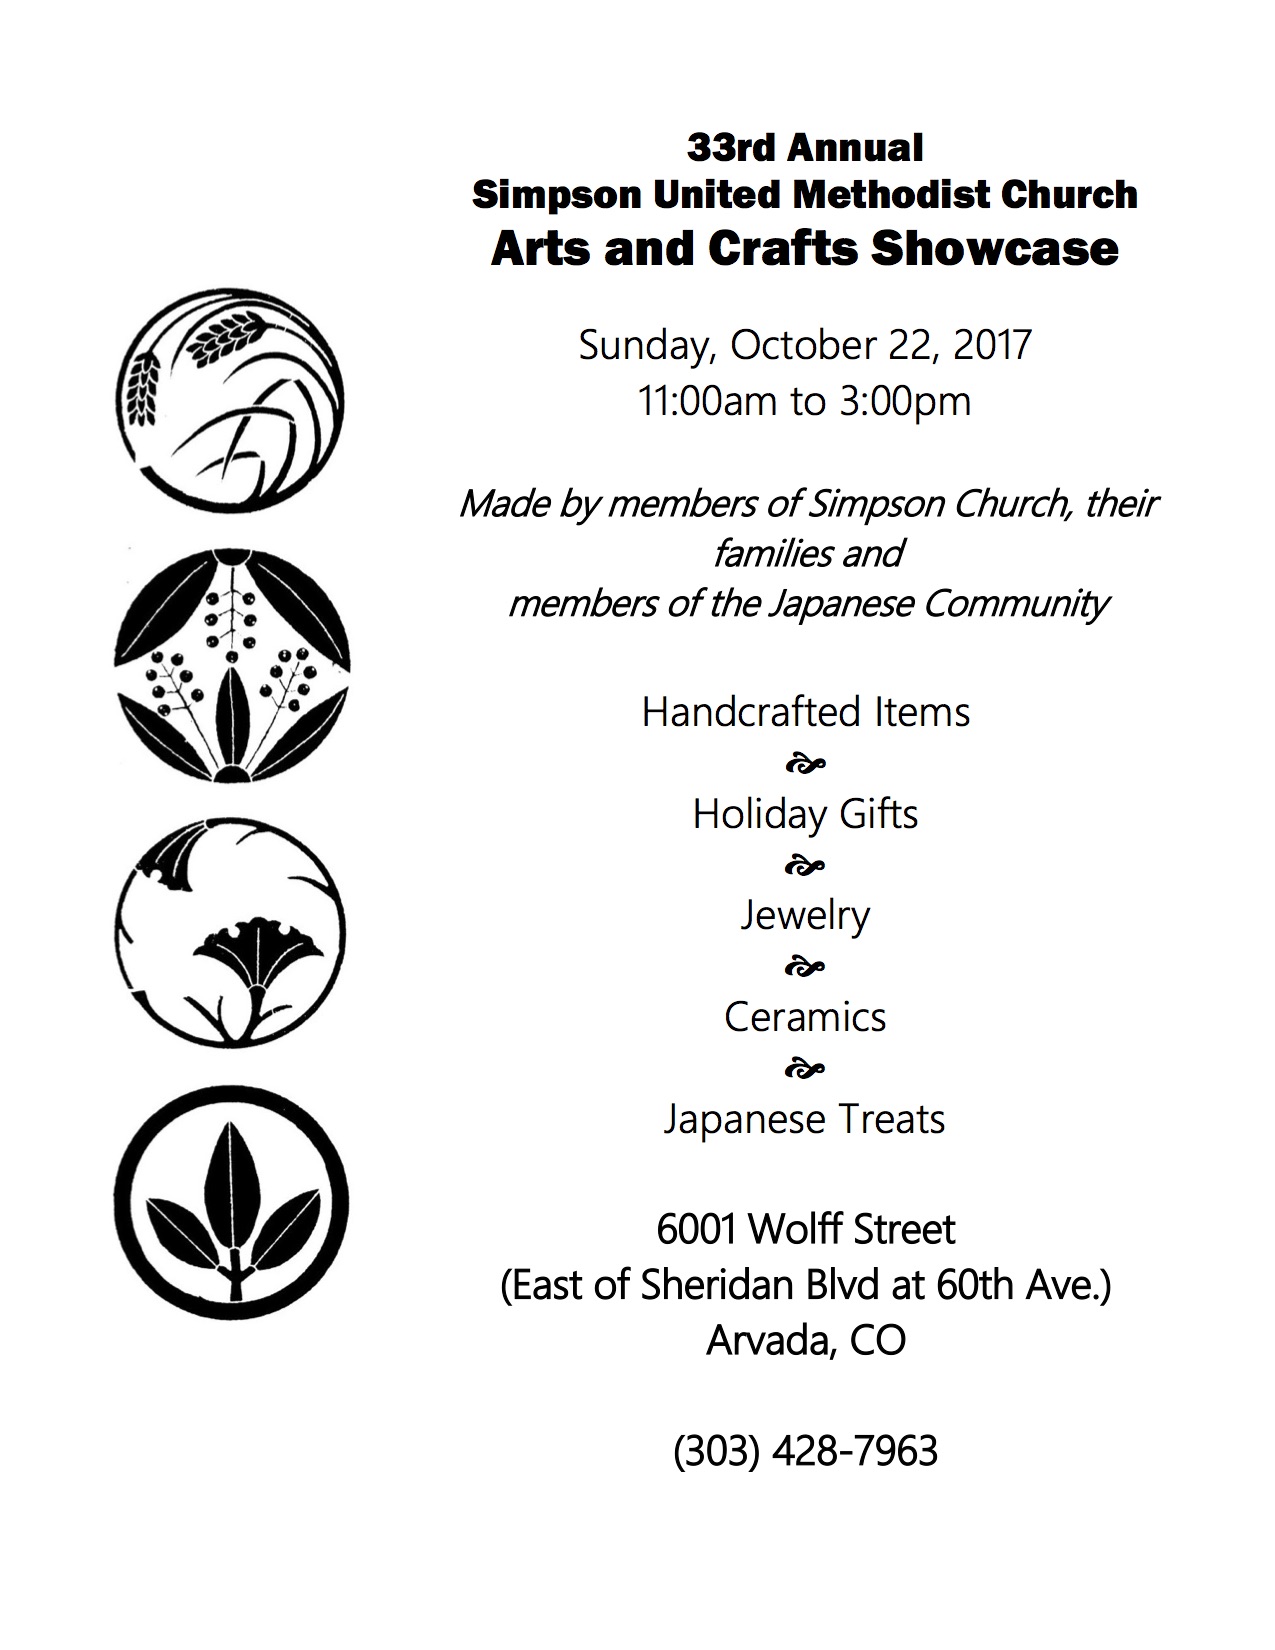 33rd Annual Simpson United Methodist Church Arts and Crafts Showcase flyer.